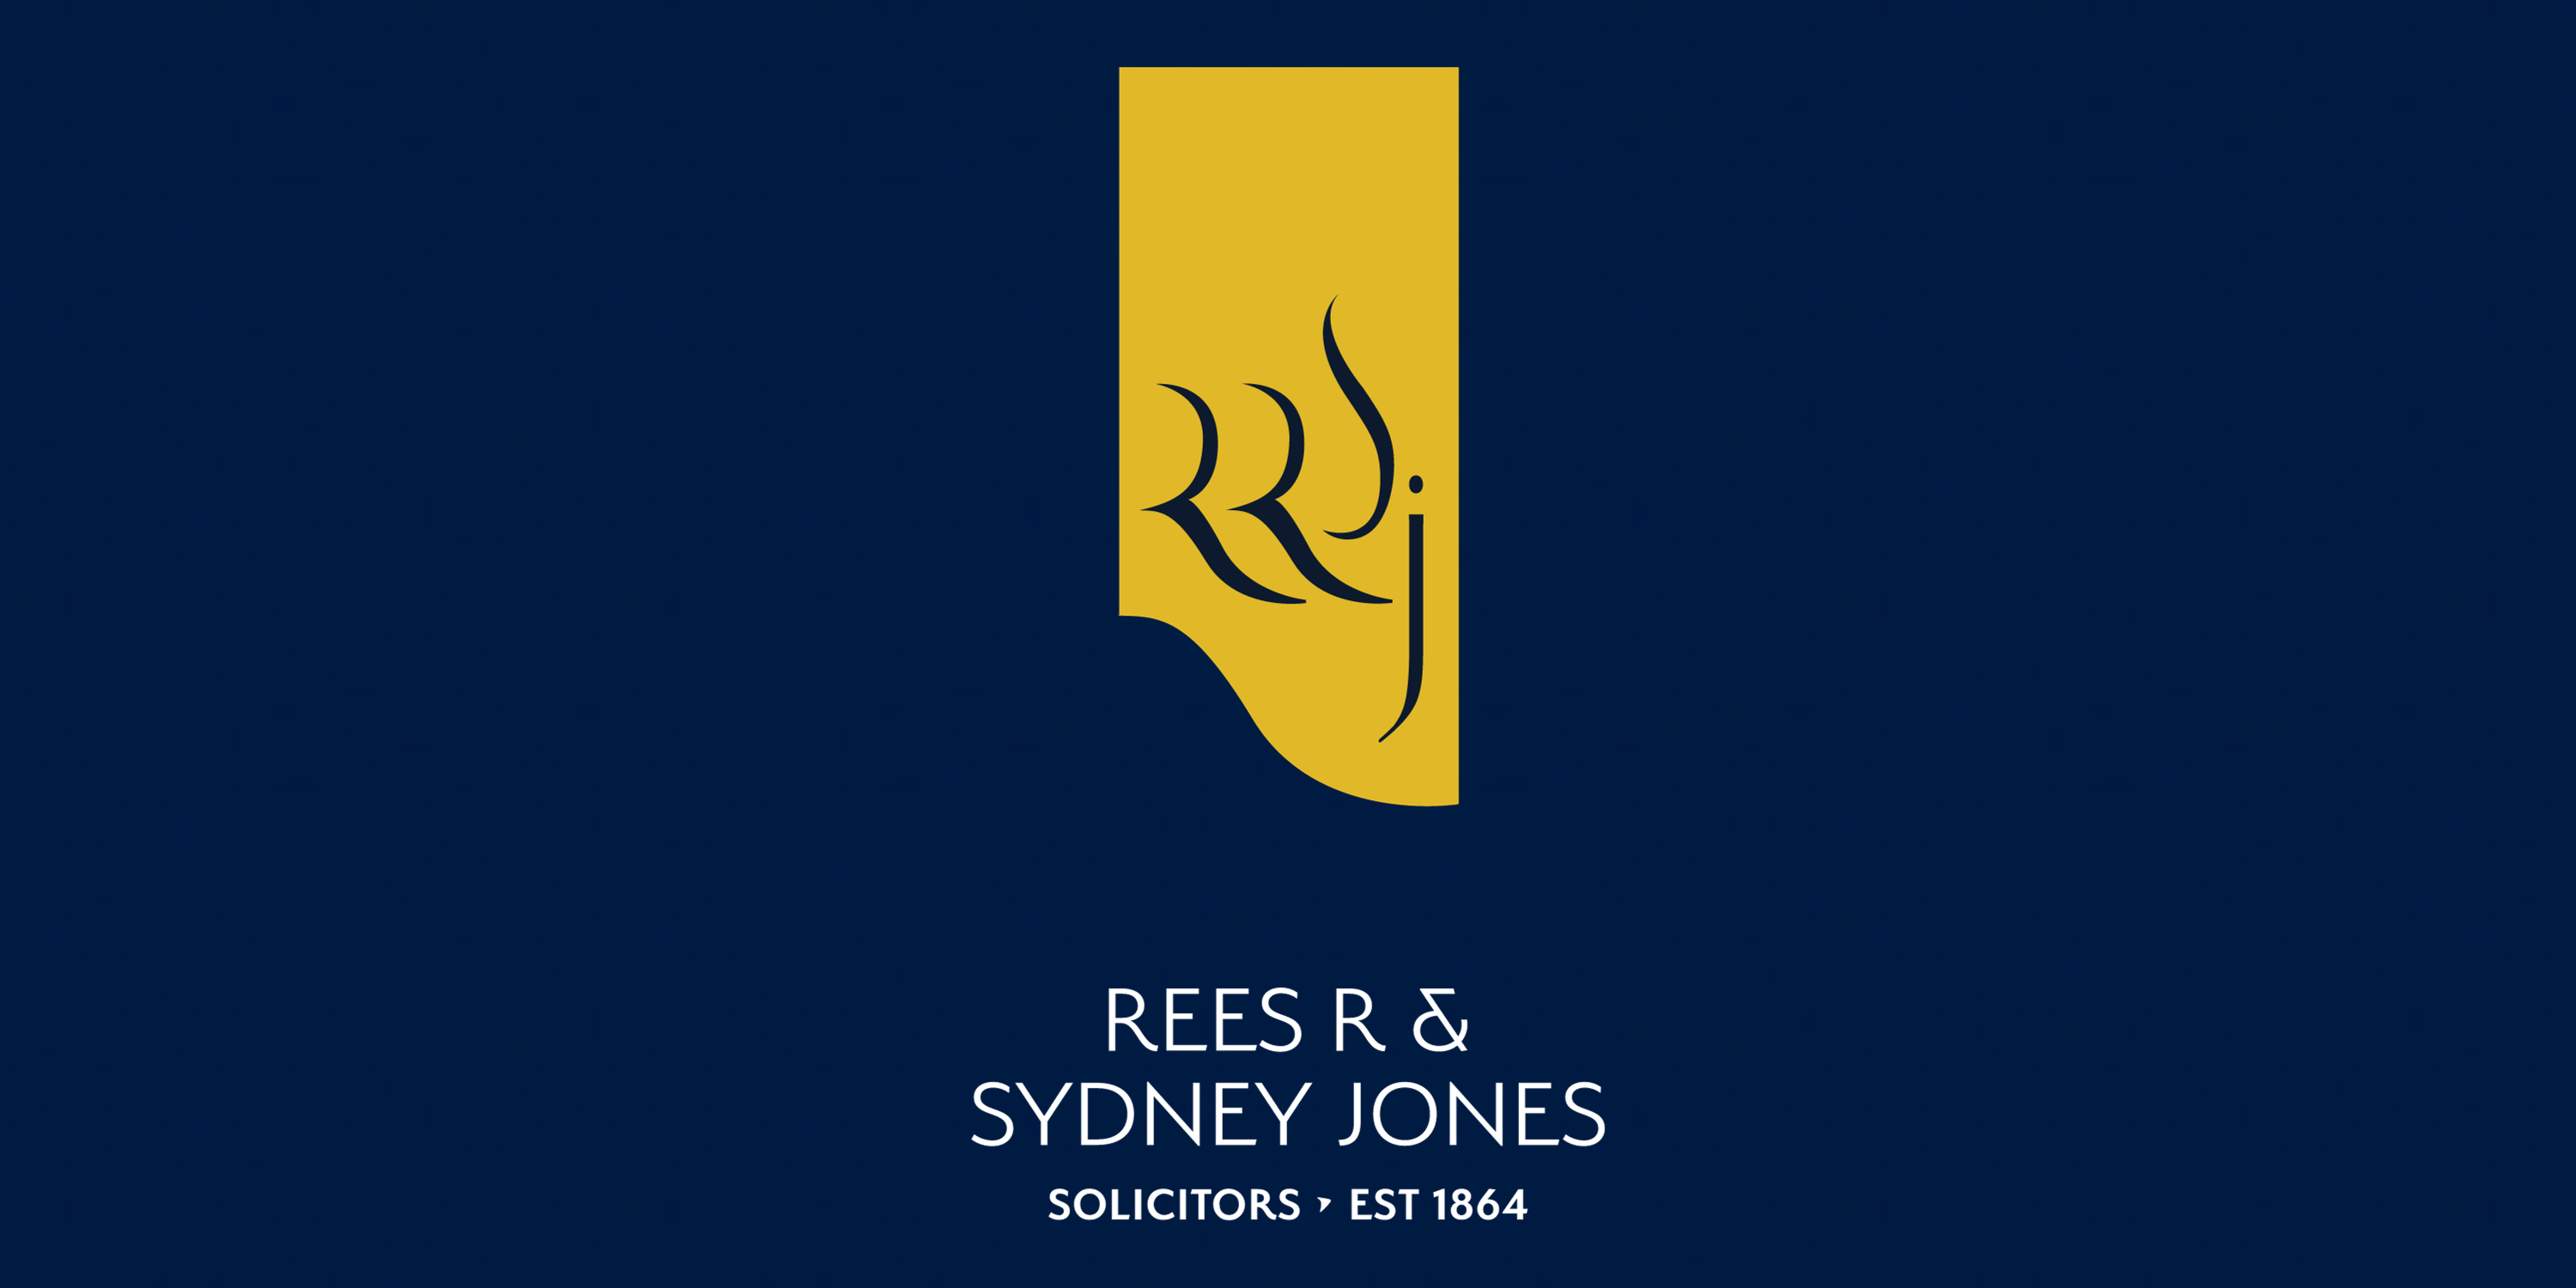 Rees R & Sydney Jones